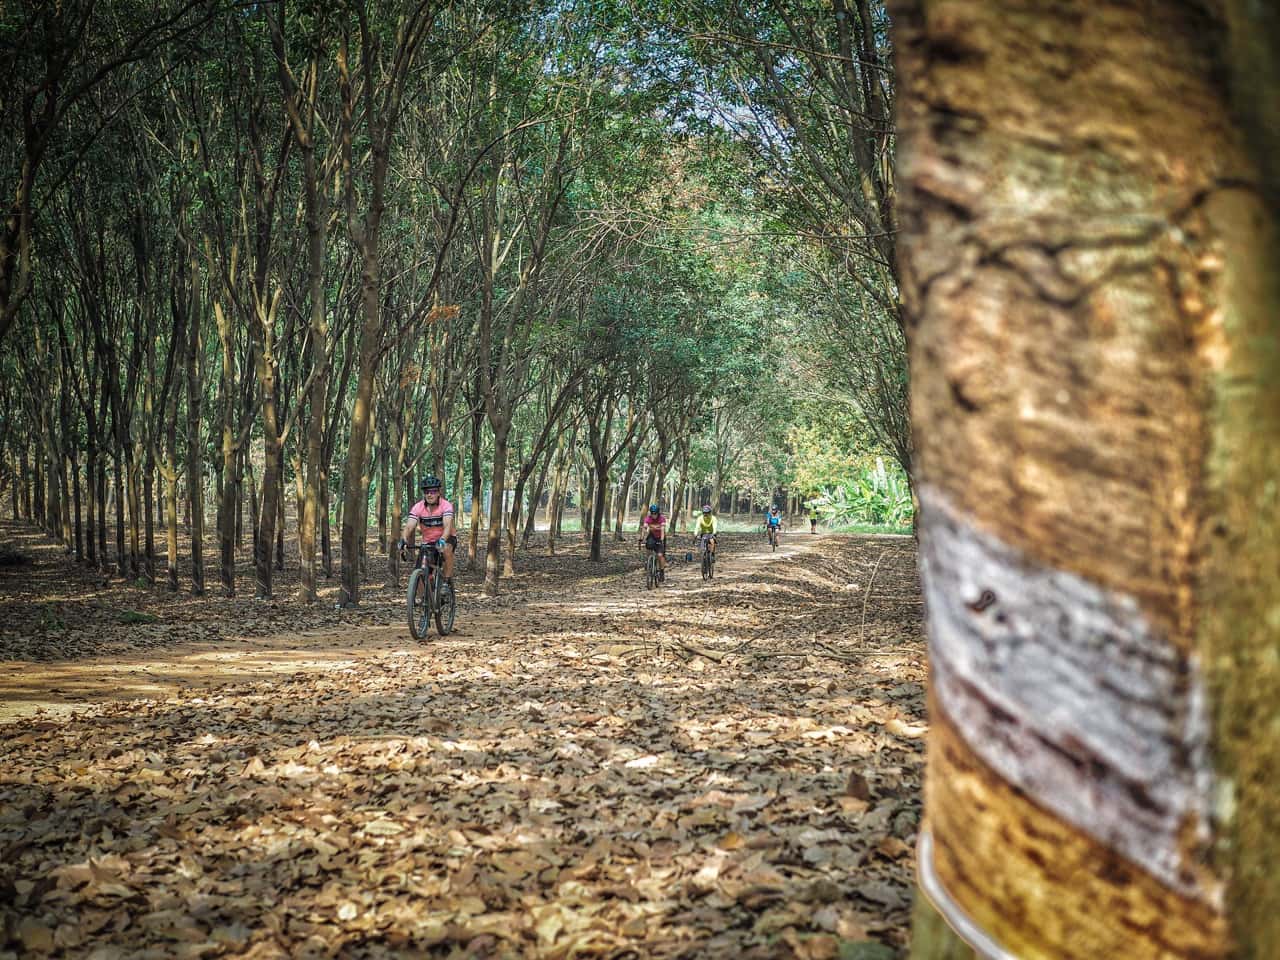 gravel bikes passing through rubber plantation during Thailand tour 